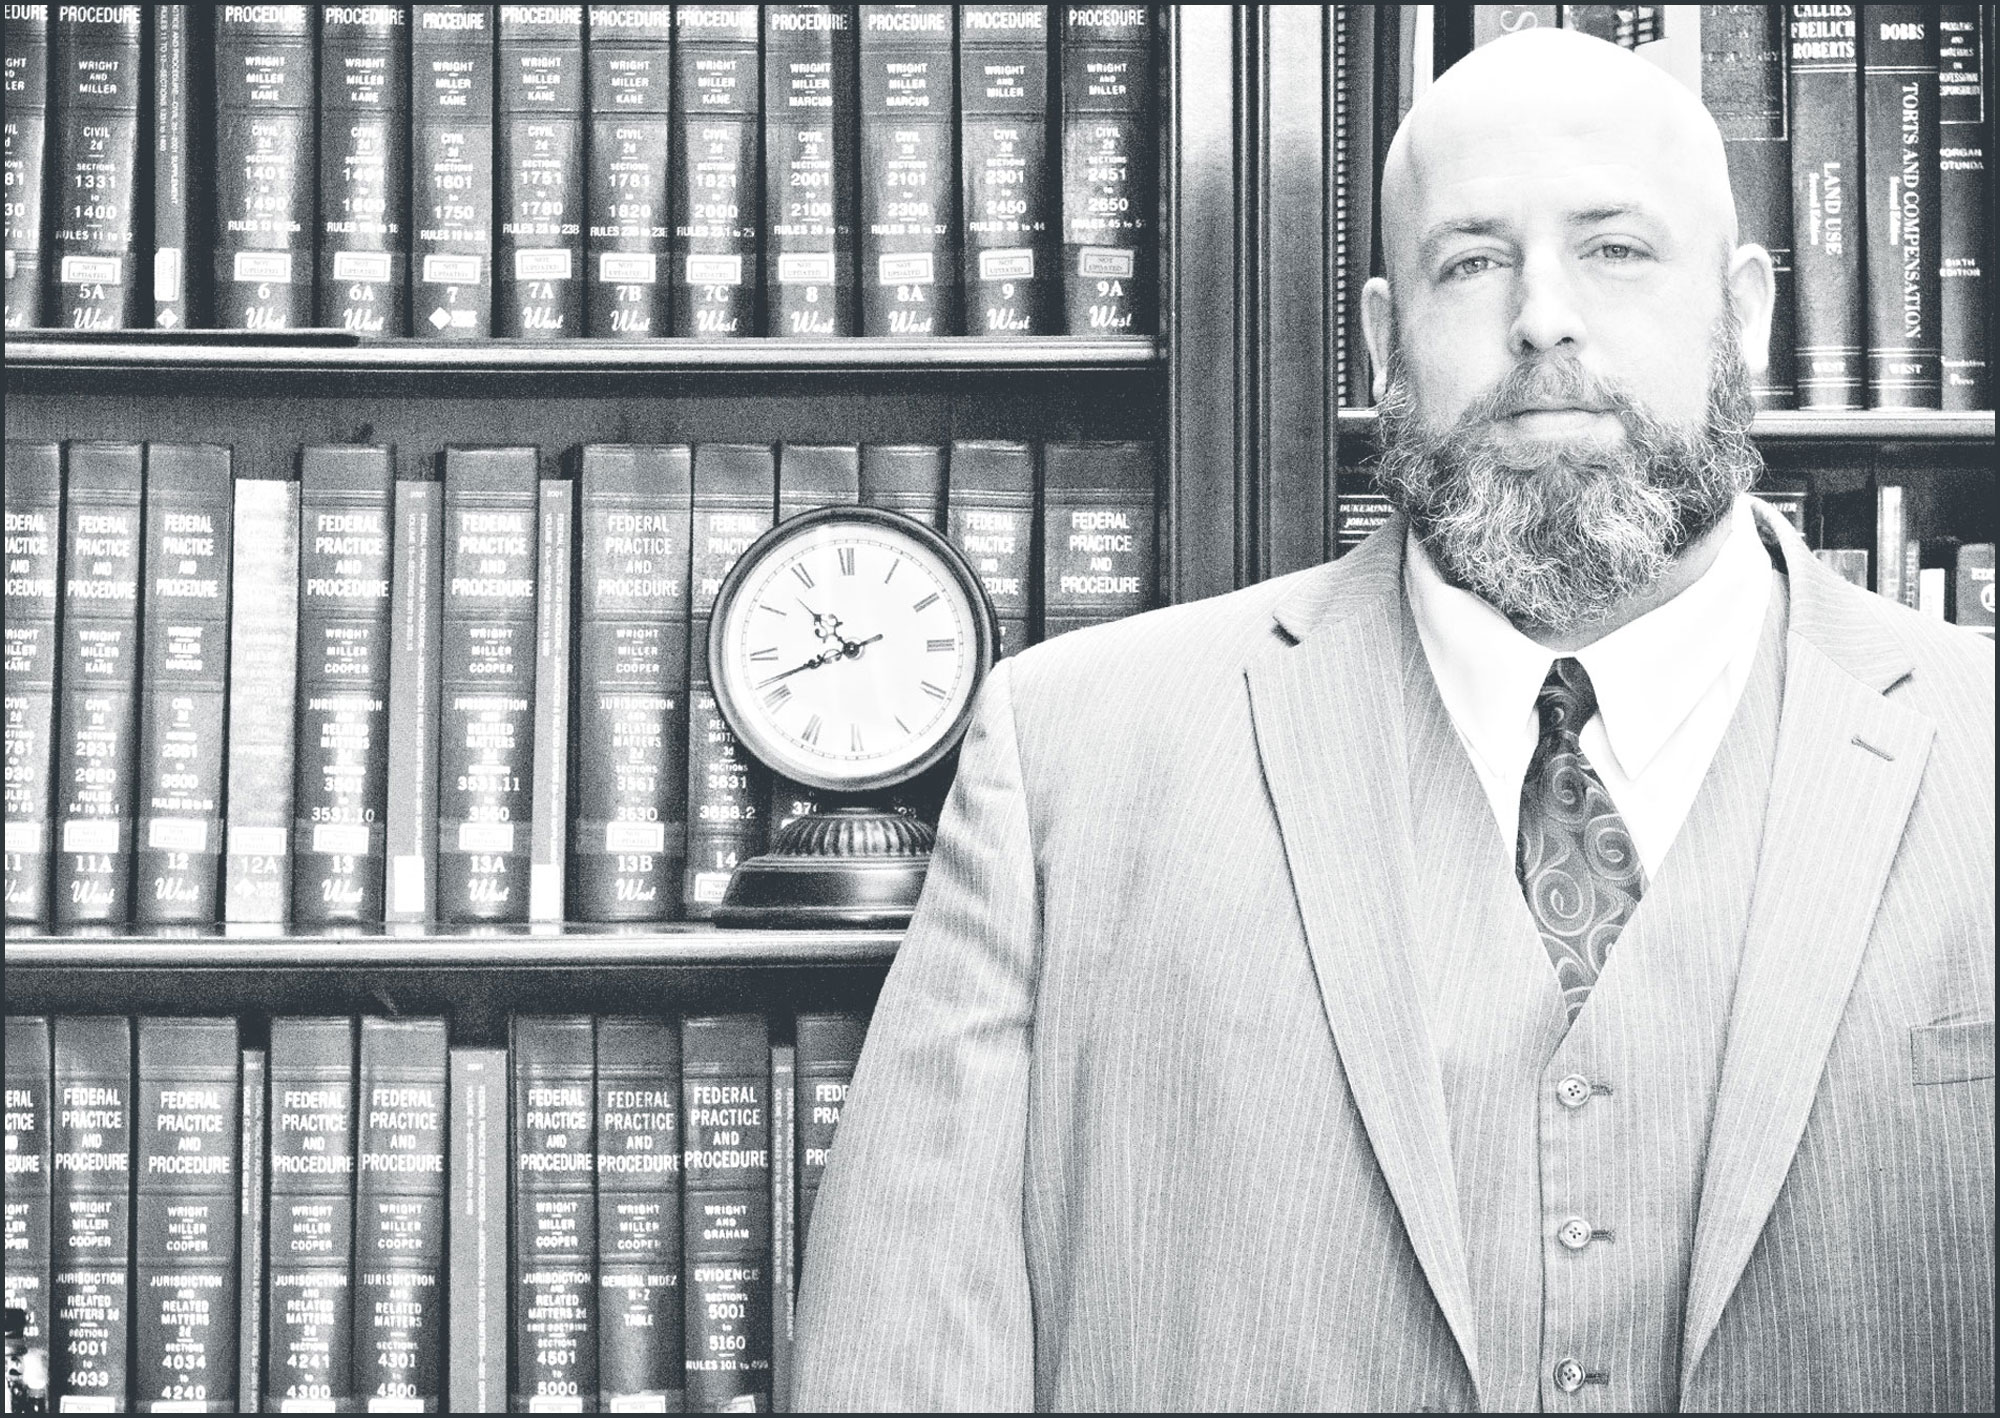 Thomas R. Houlihan. Akron Attorney.